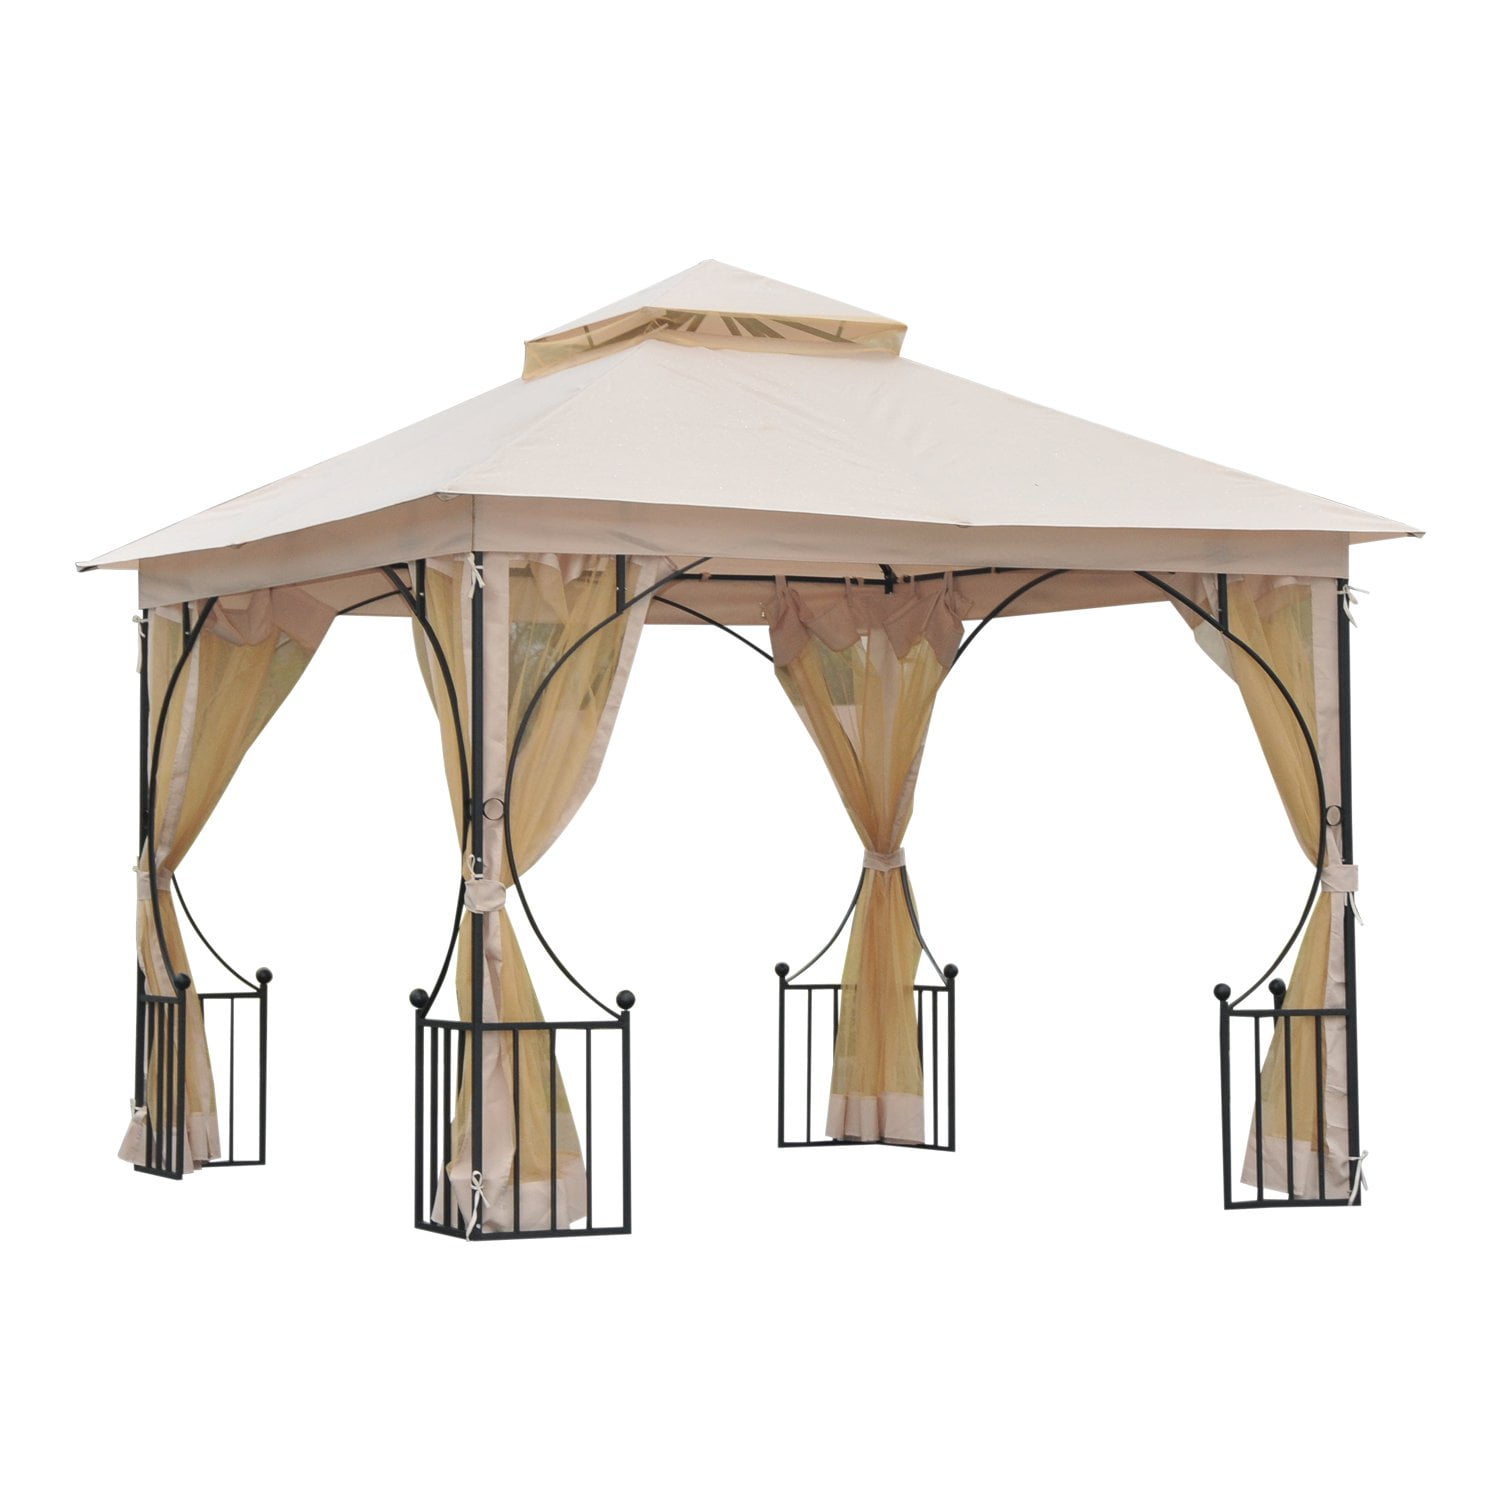 10’ x 10’ Outdoor Steel Hardtop Canopy Gazebo with Curtains - Walmart.com